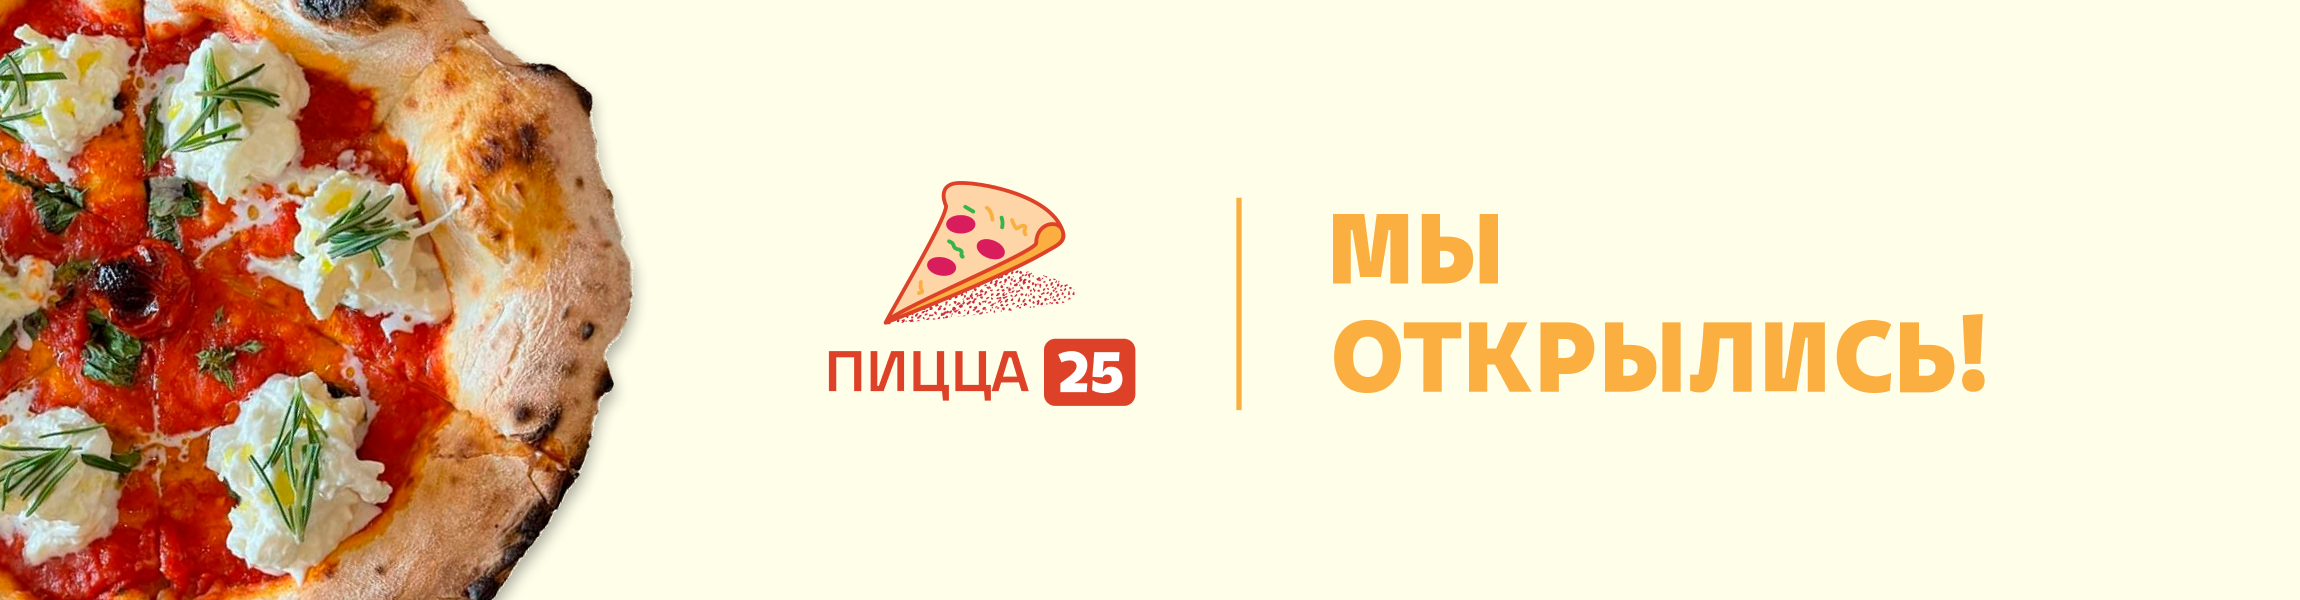 Пицца 25: мы открыты!